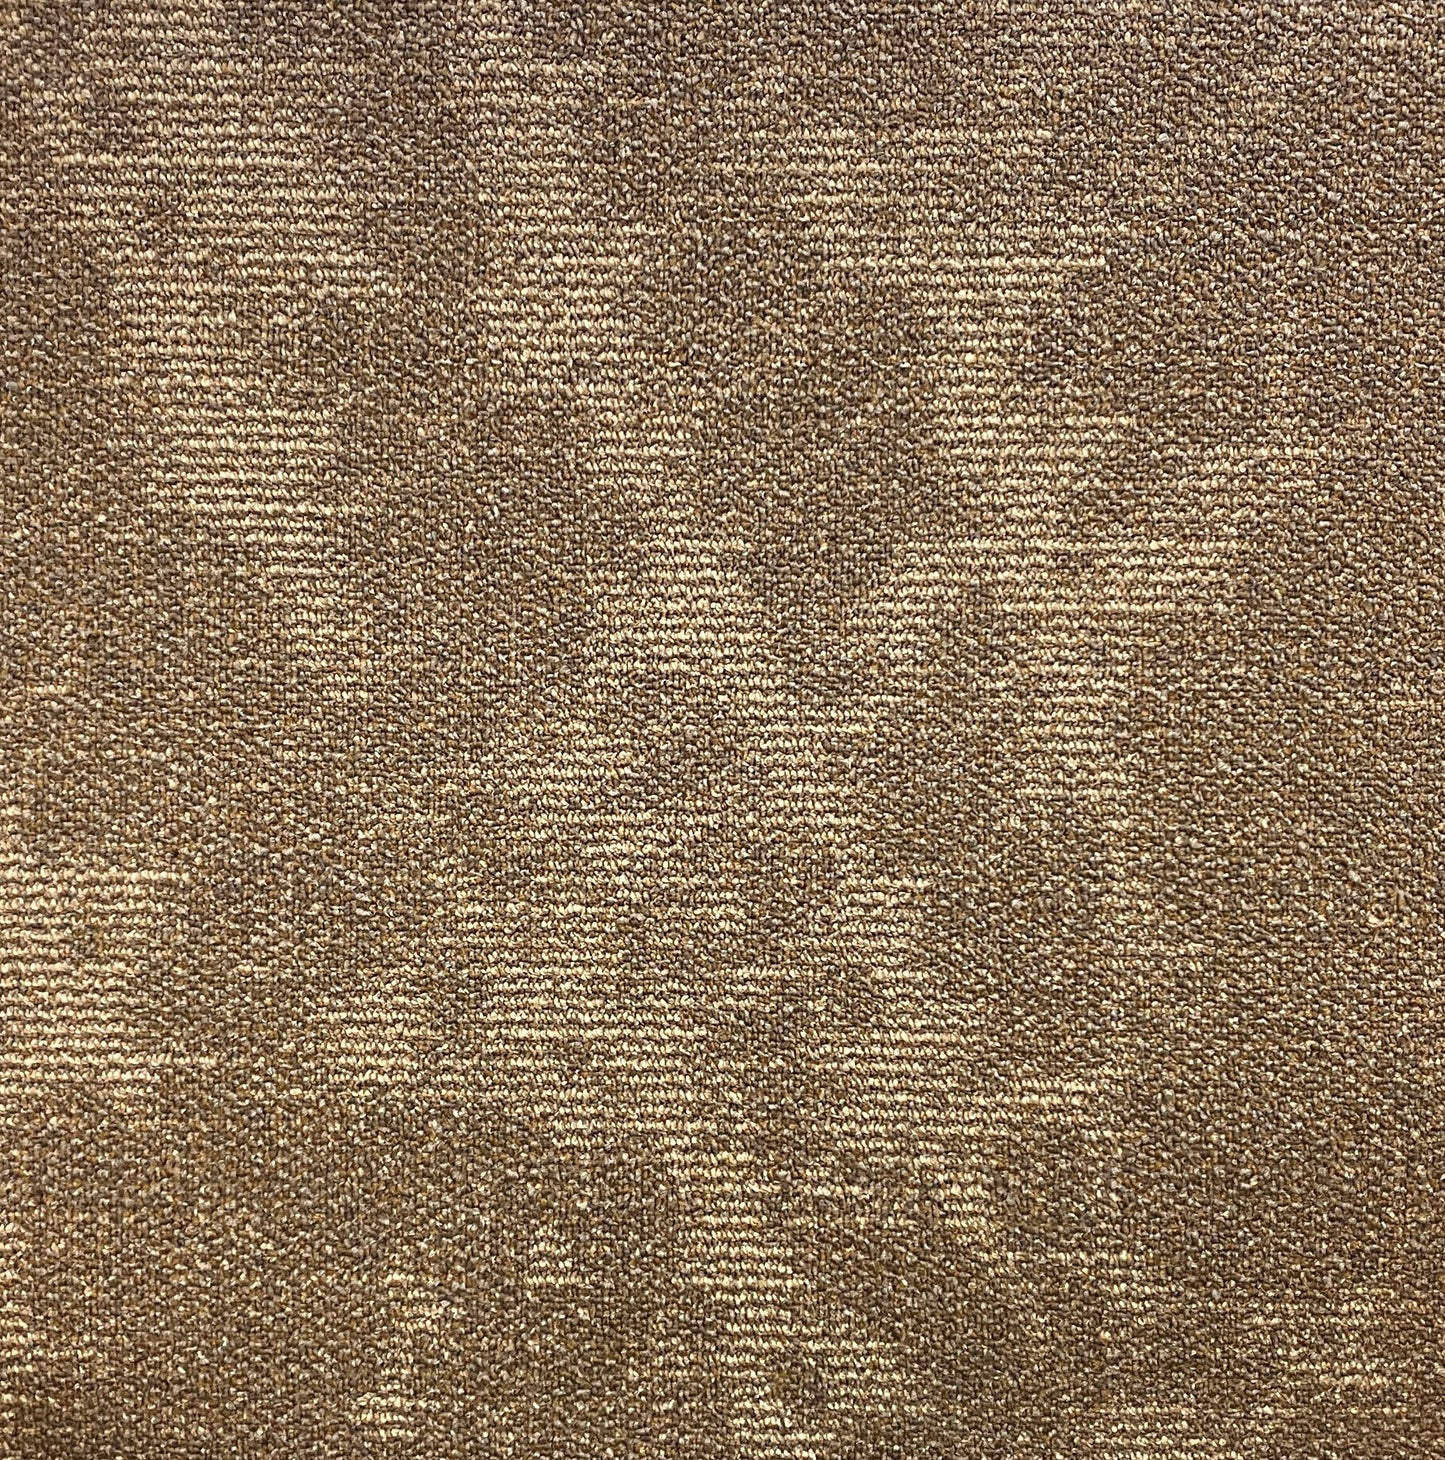 Shaw Amber Delight Carpet Tile-24"x 24"(12 Tiles/case, 48 sq. ft./case)